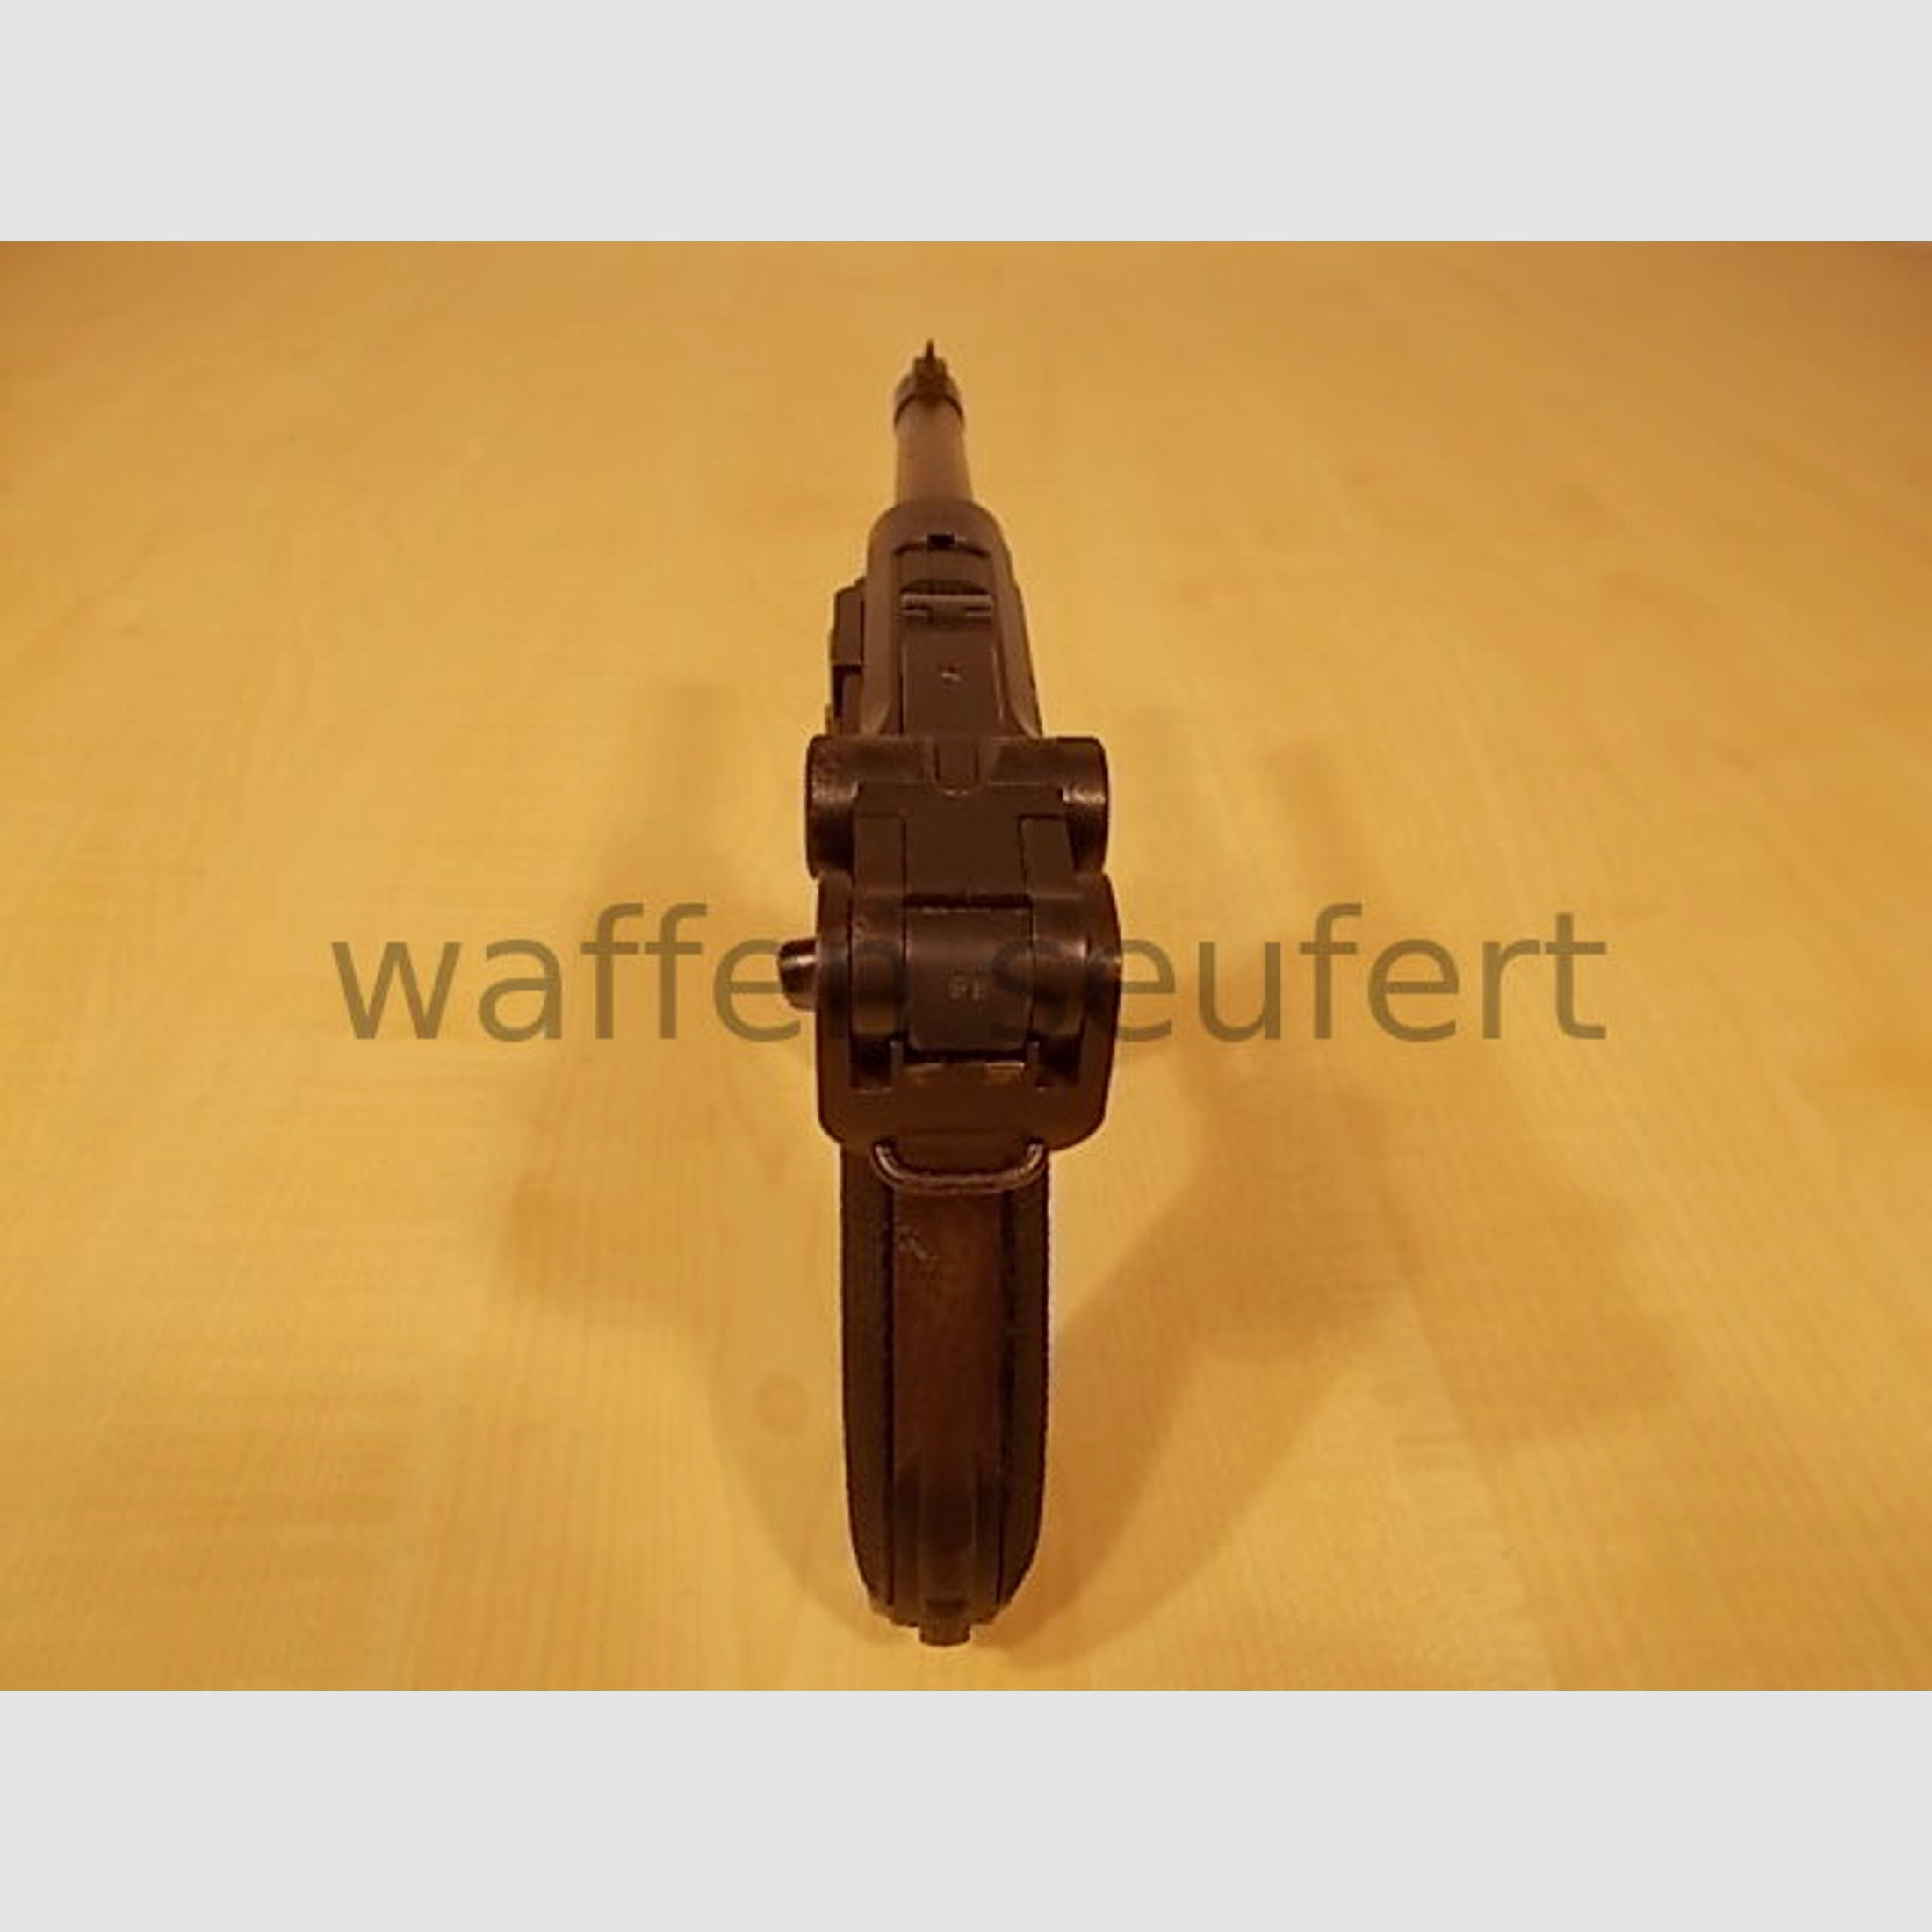 Mauser 08 S/42 1937 Pistole